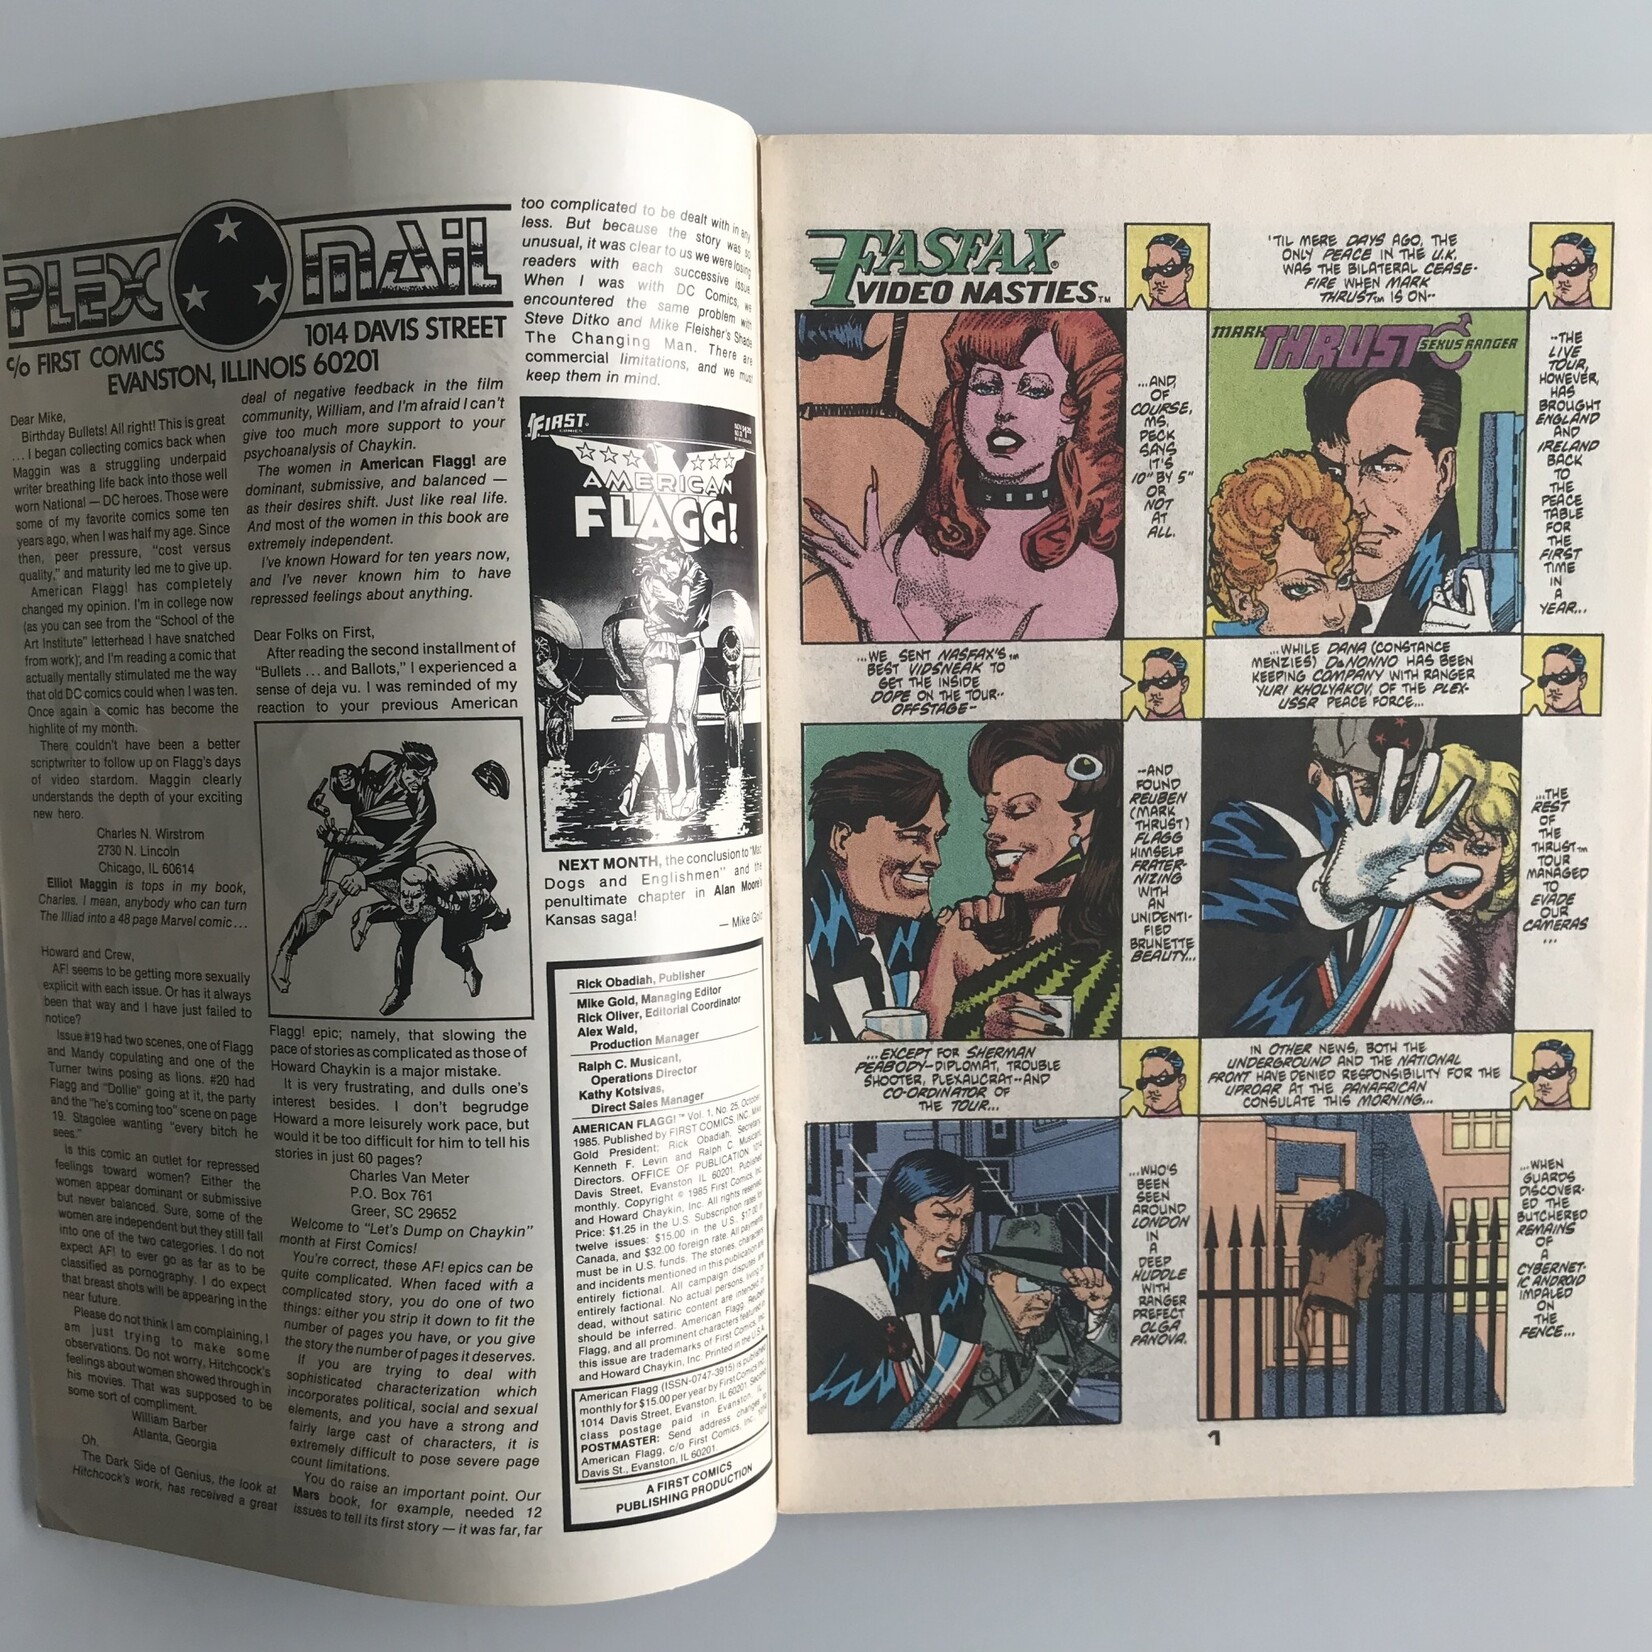 American Flagg! - Vol. 1 #25 October 1985 - Comic Book